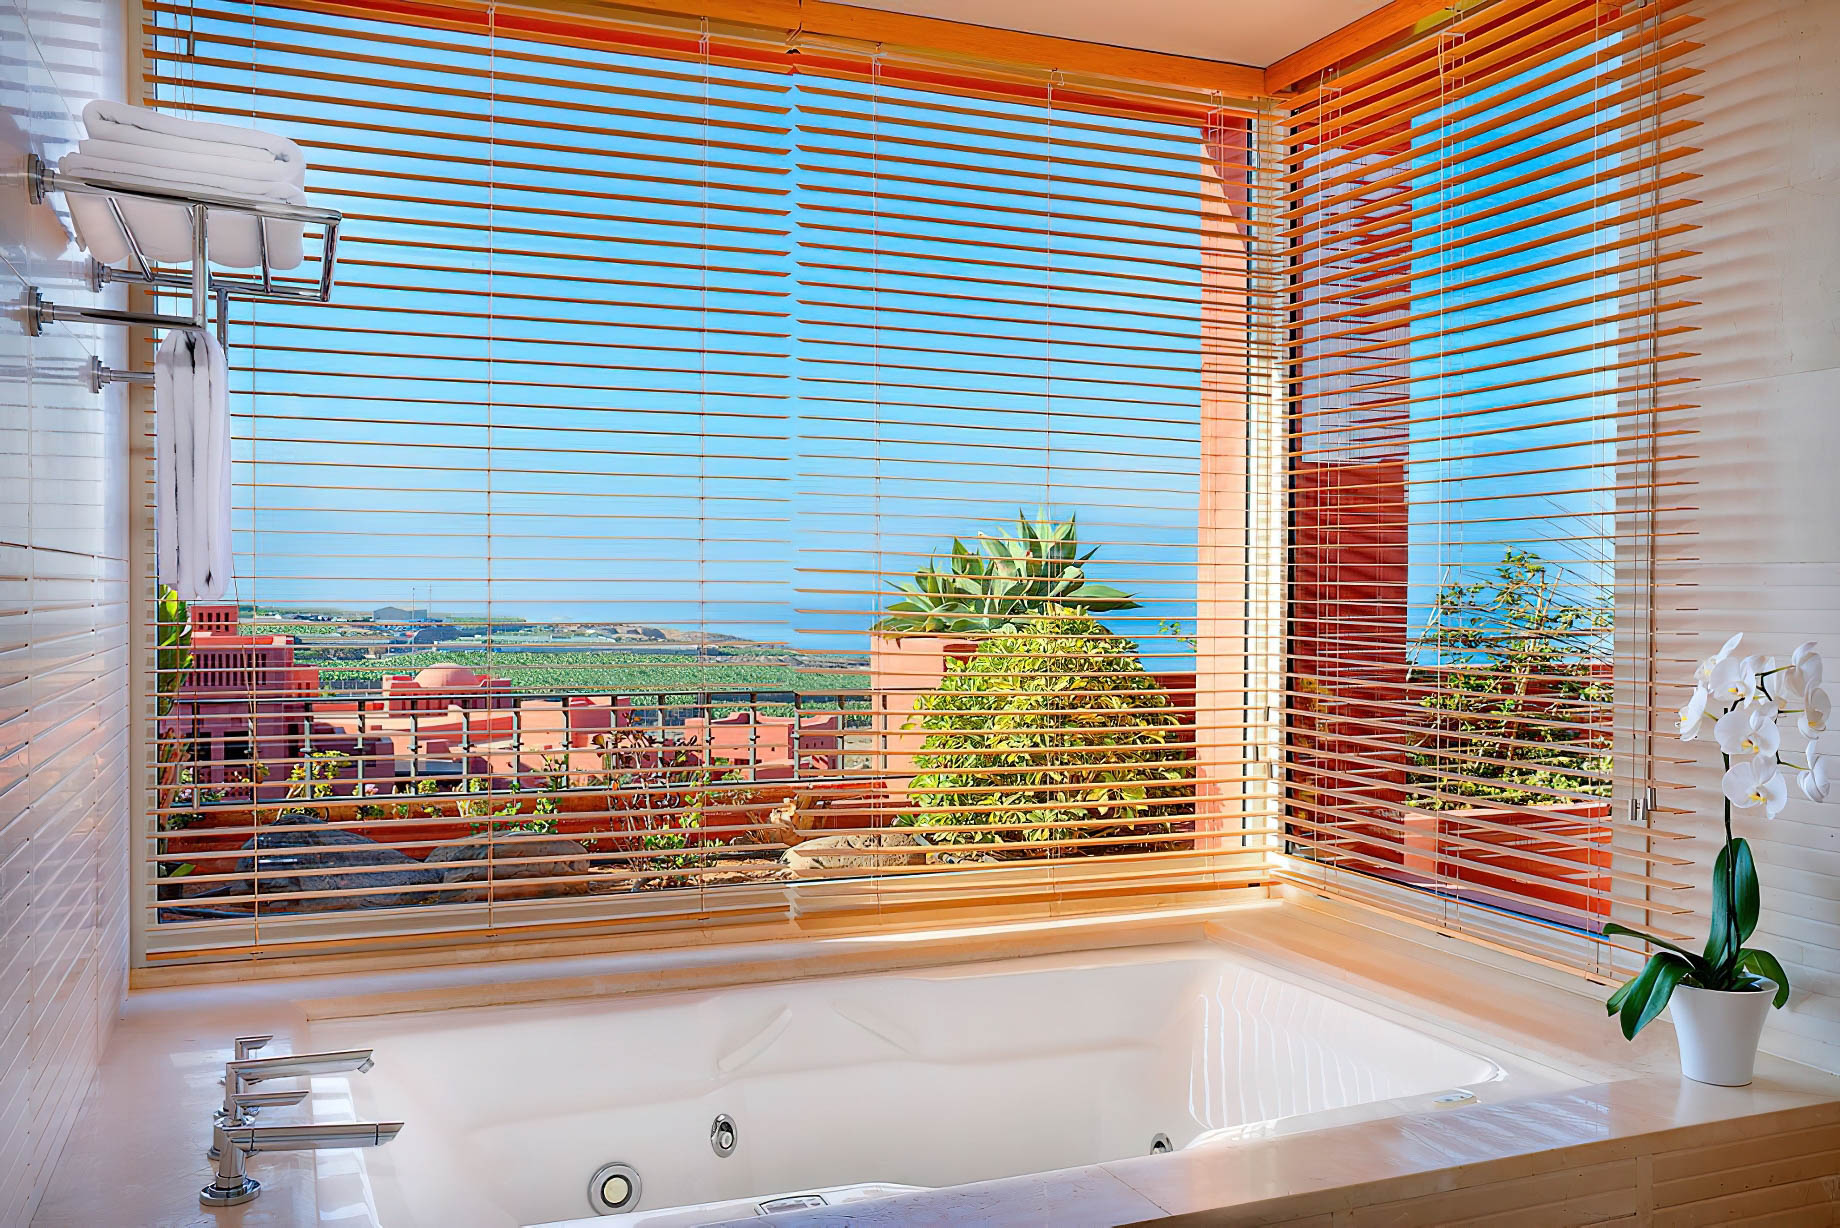 The Ritz-Carlton, Abama Resort - Santa Cruz de Tenerife, Spain - Imperial Suite Bathroom Tub